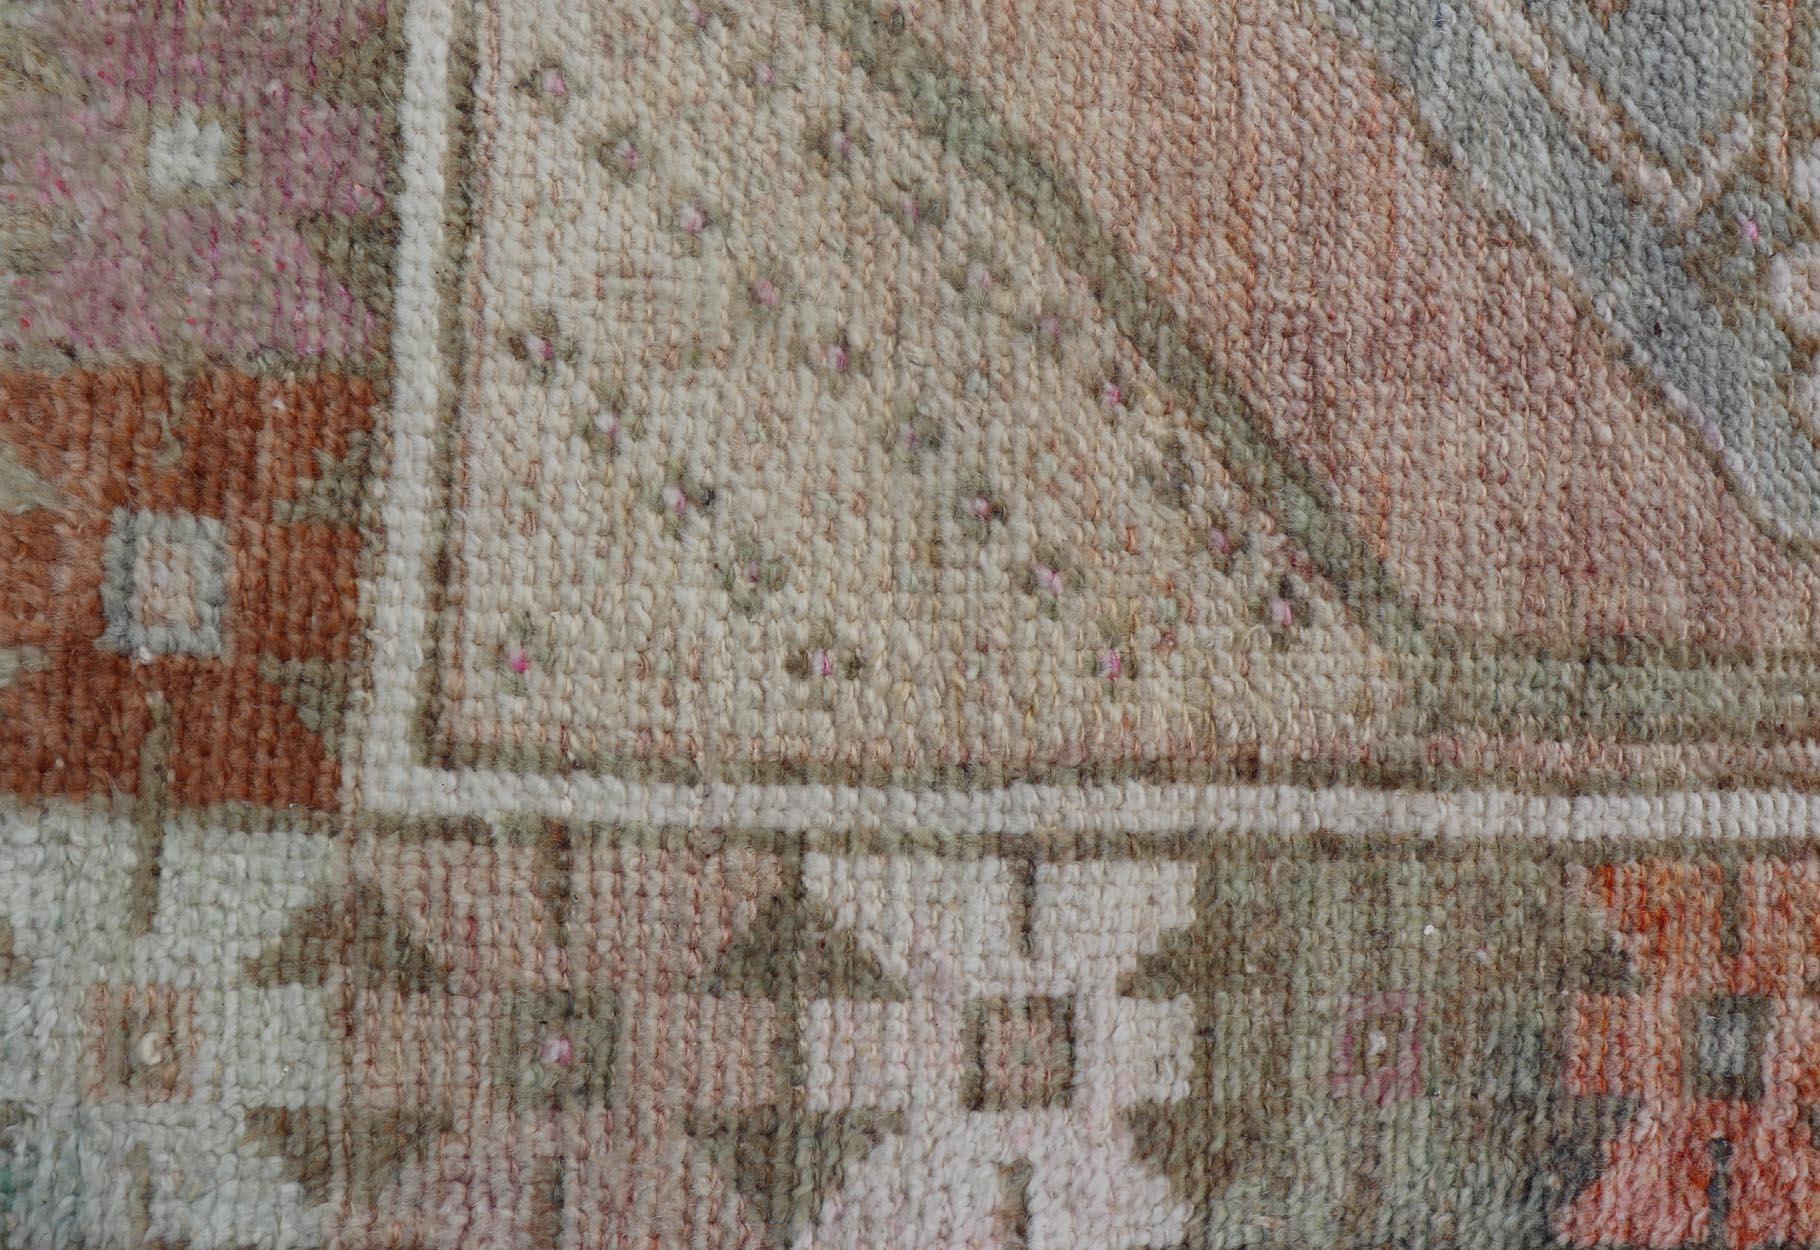 Vintage Turkish Oushak Carpet with Beautiful Floral Motifs in Tan, Camel, Orange. Keivan Woven Arts / rug EN-15368, country of origin / type: Turkey / Oushak, circa mid-20th century.
Measures: 2'9 x 4'4 
This mid-century vintage Oushak carpet